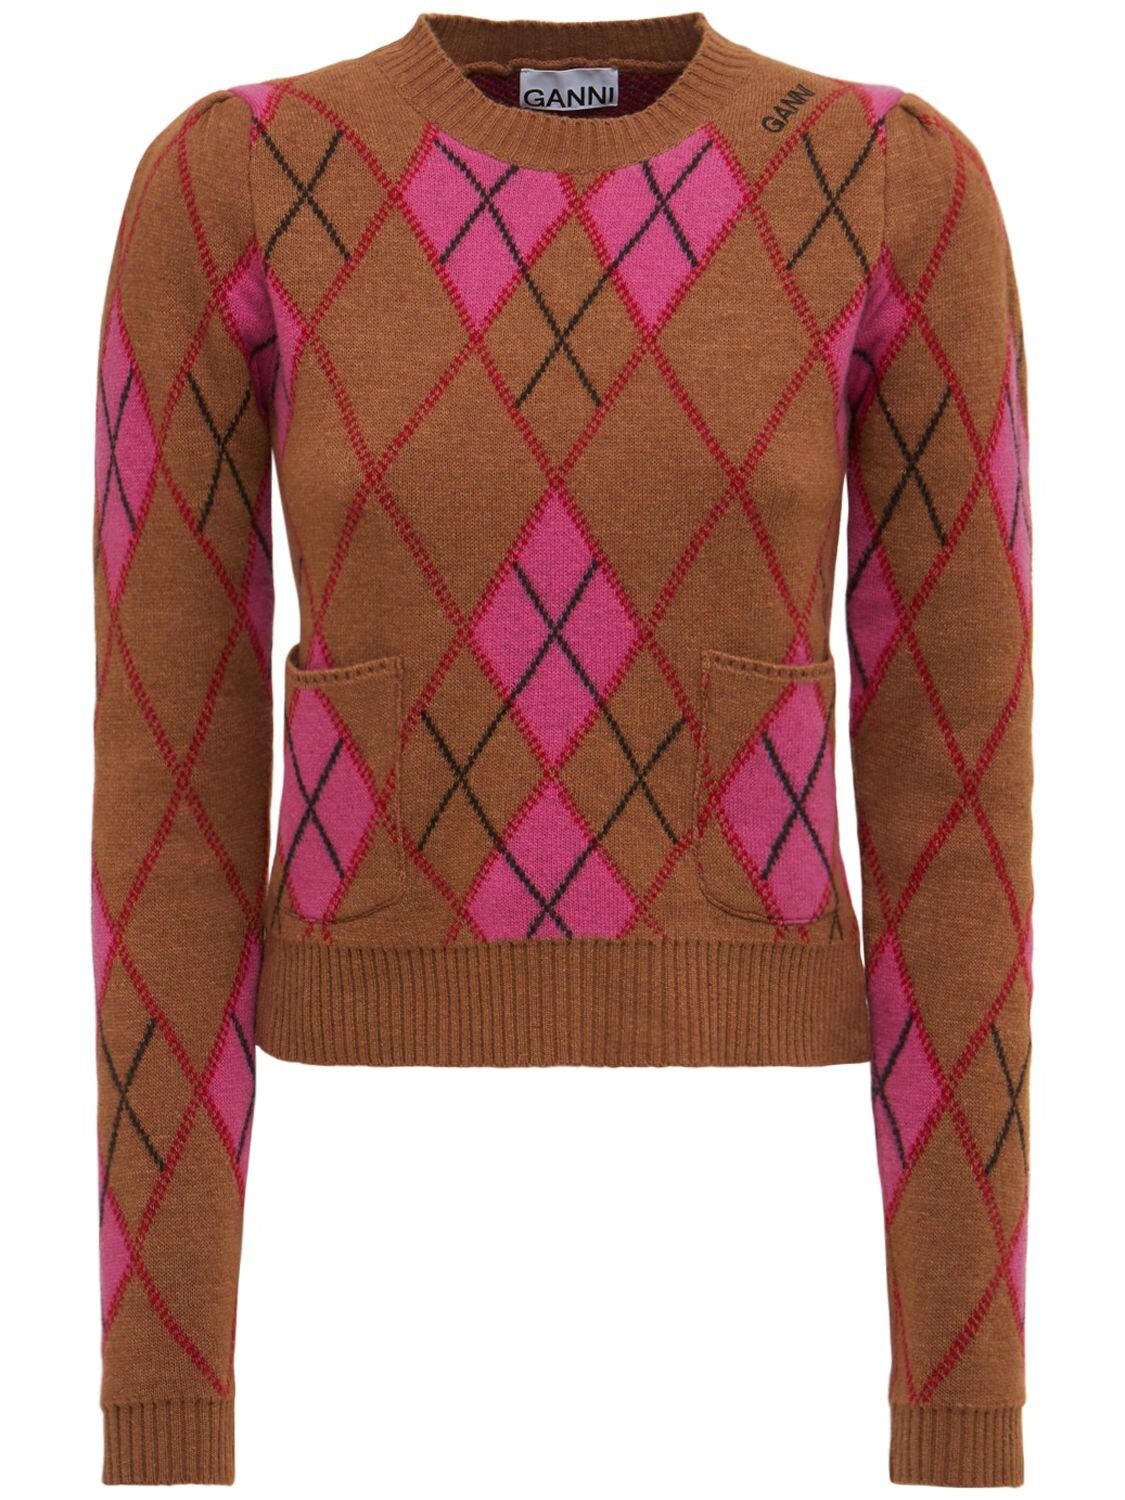 GANNI Argyle Wool Blend Crewneck Sweater